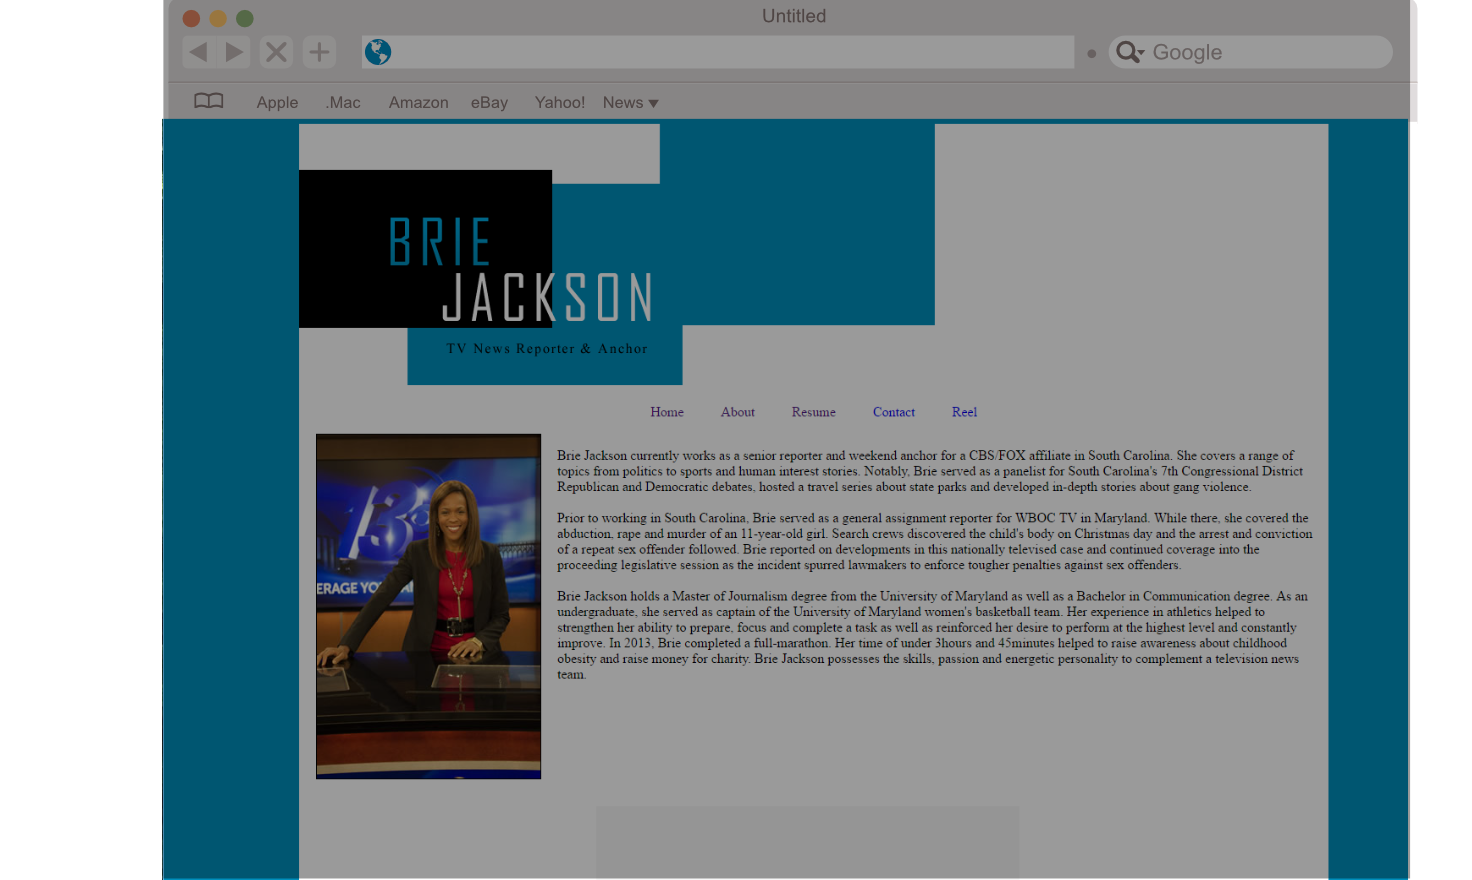 Brie Jackson